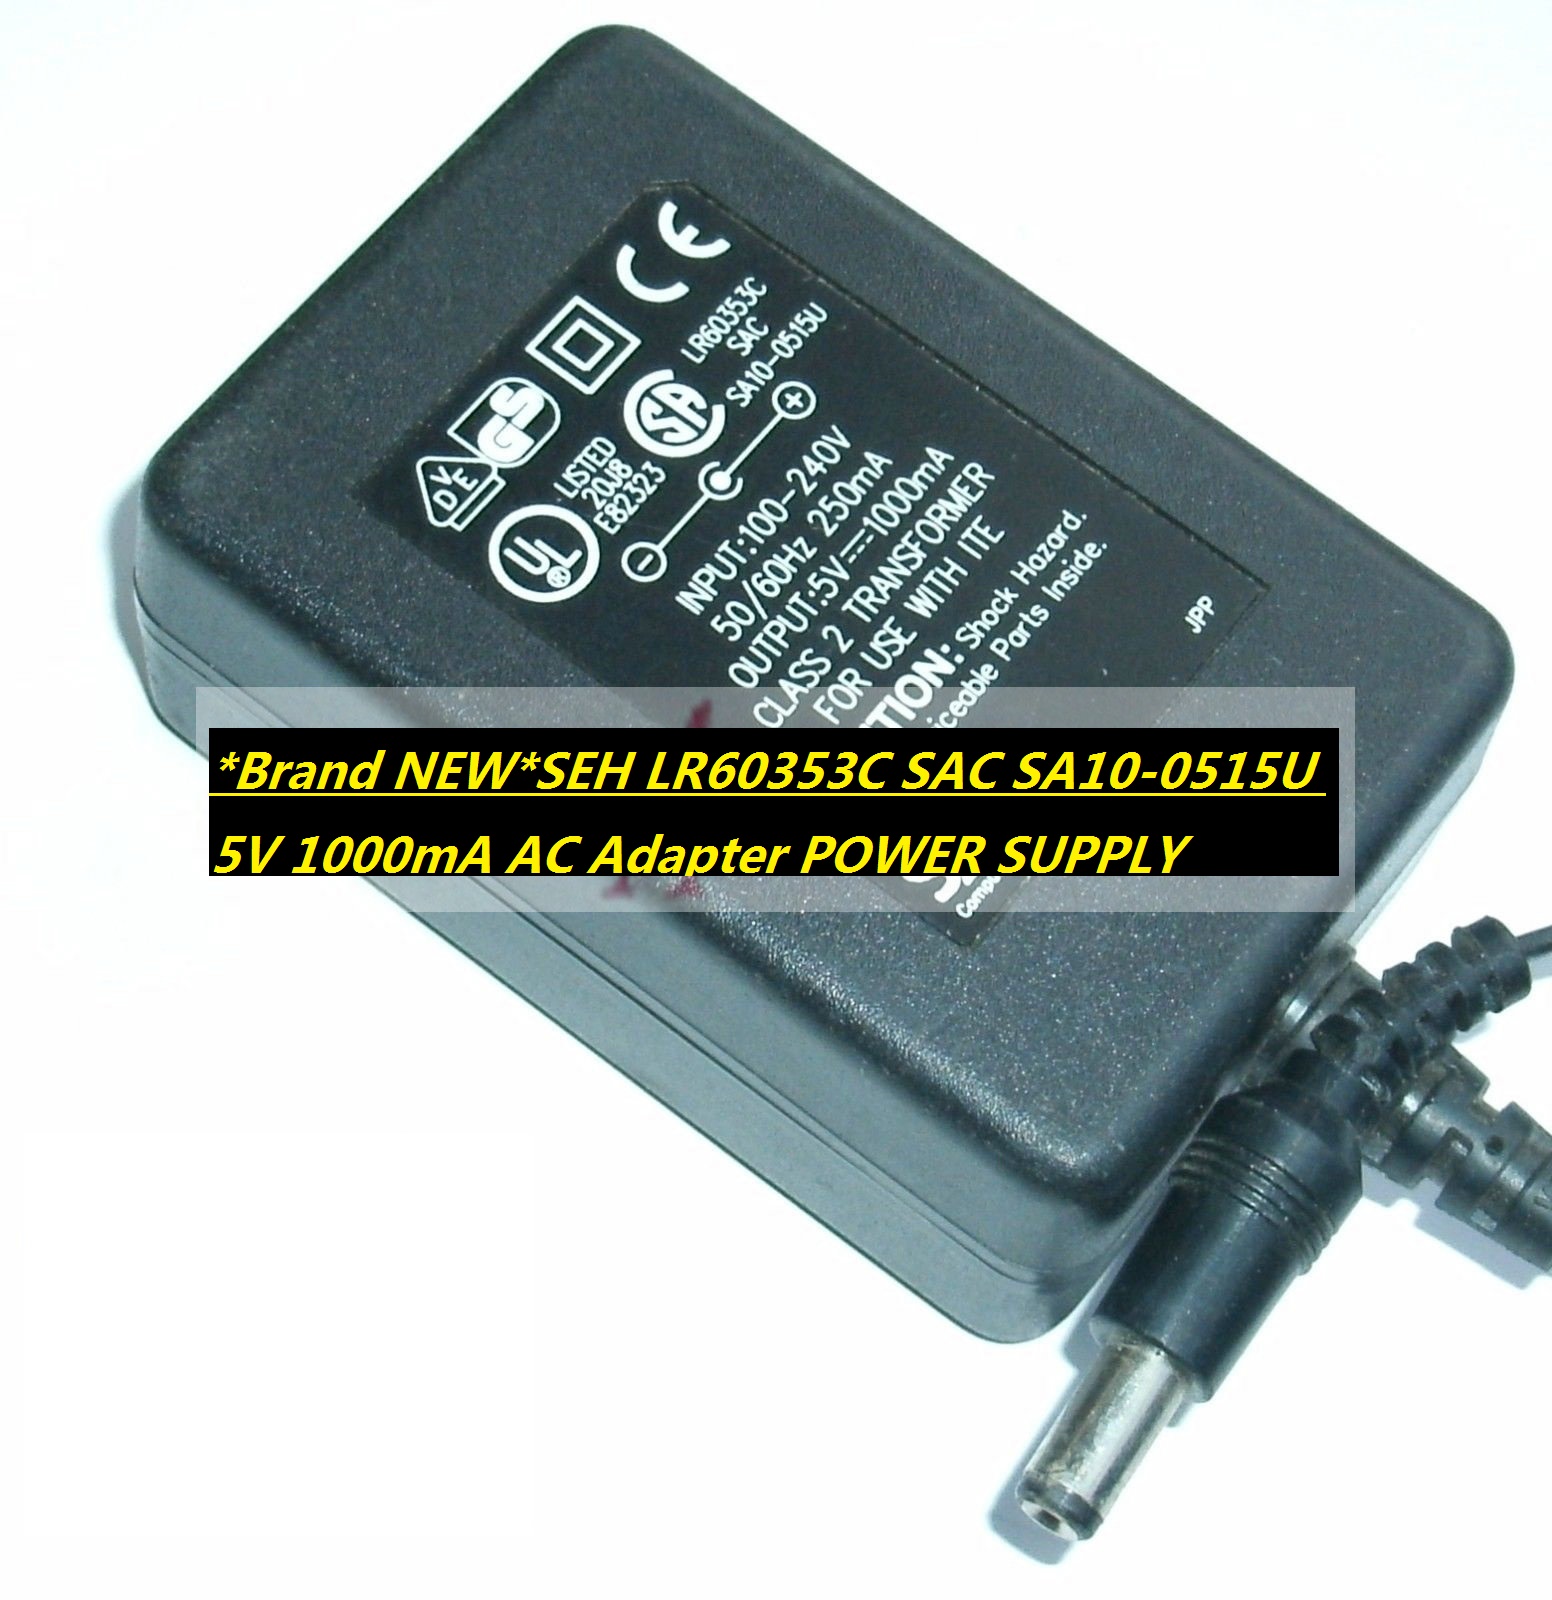 *Brand NEW*SEH LR60353C SAC SA10-0515U 5V 1000mA AC Adapter POWER SUPPLY